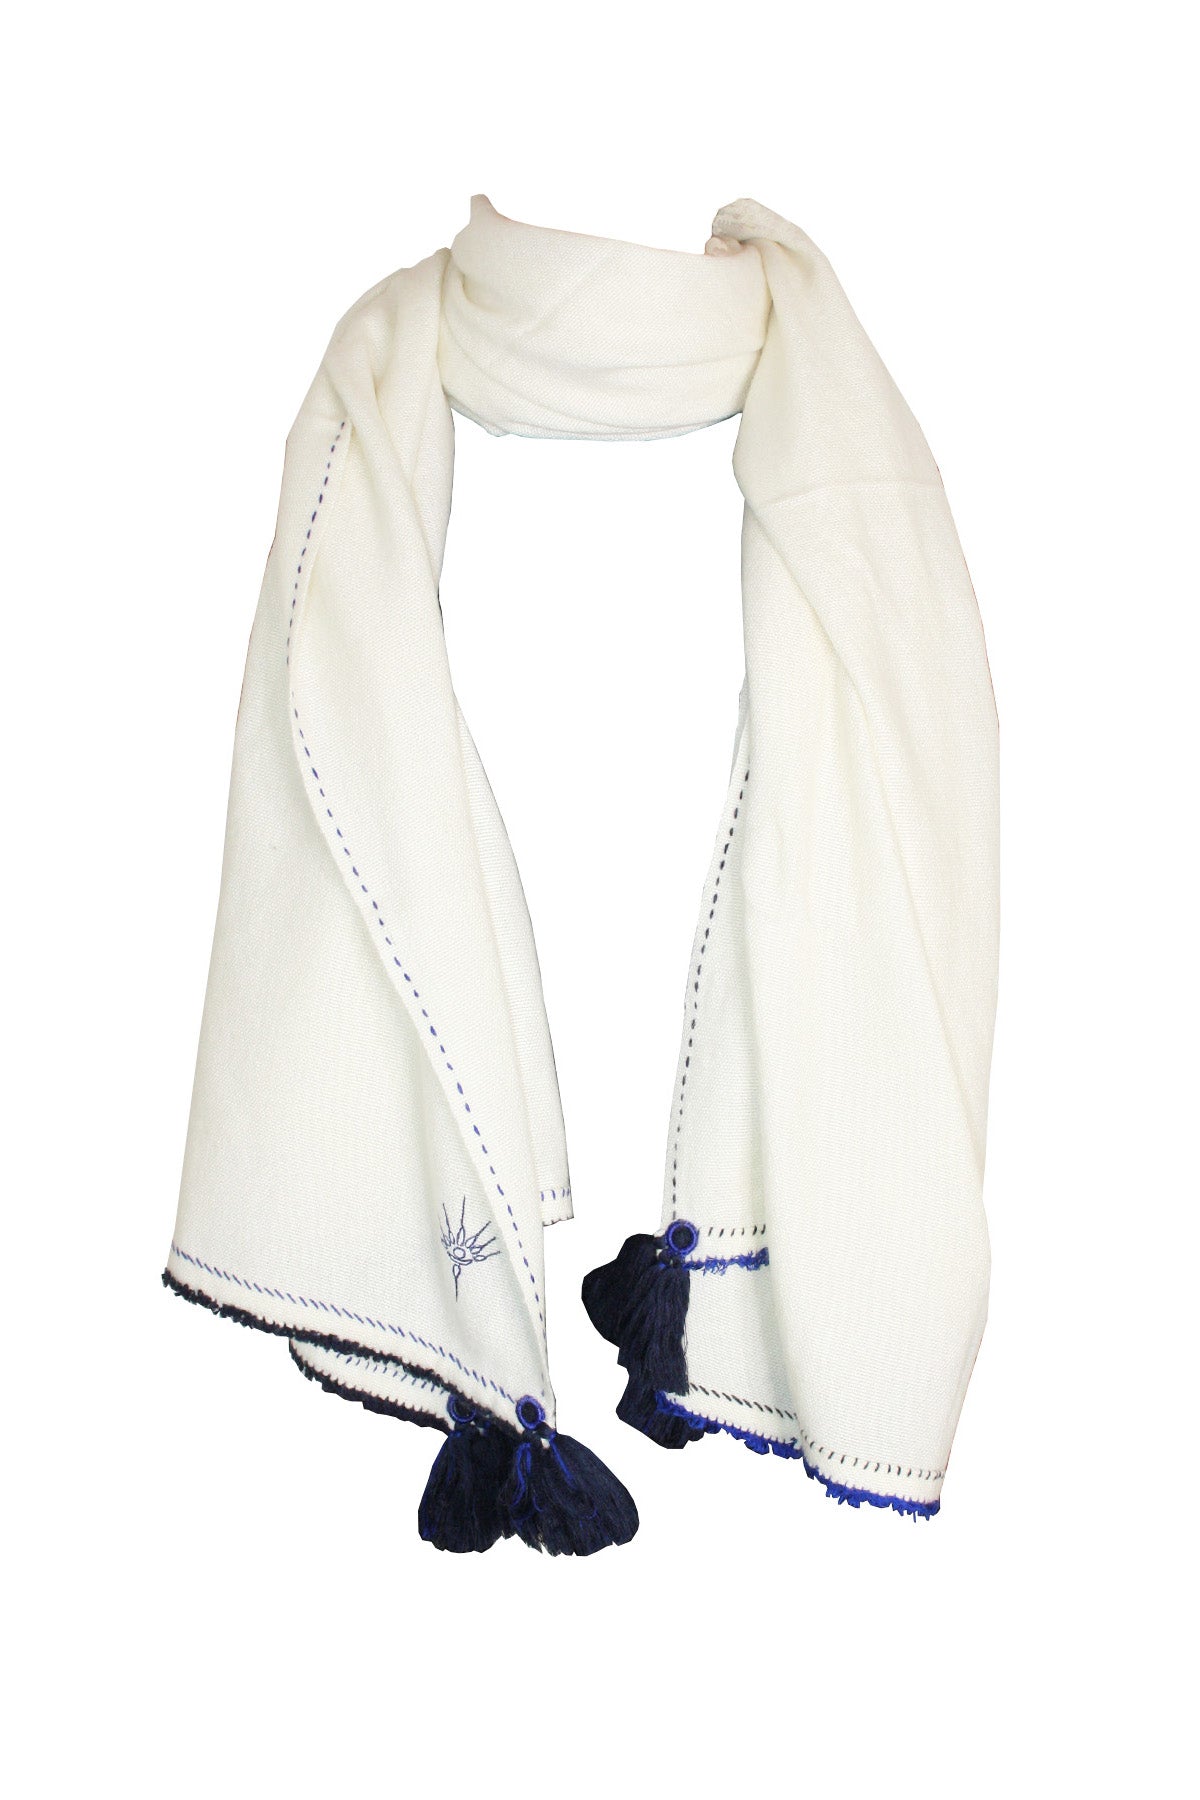 Meditation Shawl - Off White with Navy Blue Tassels